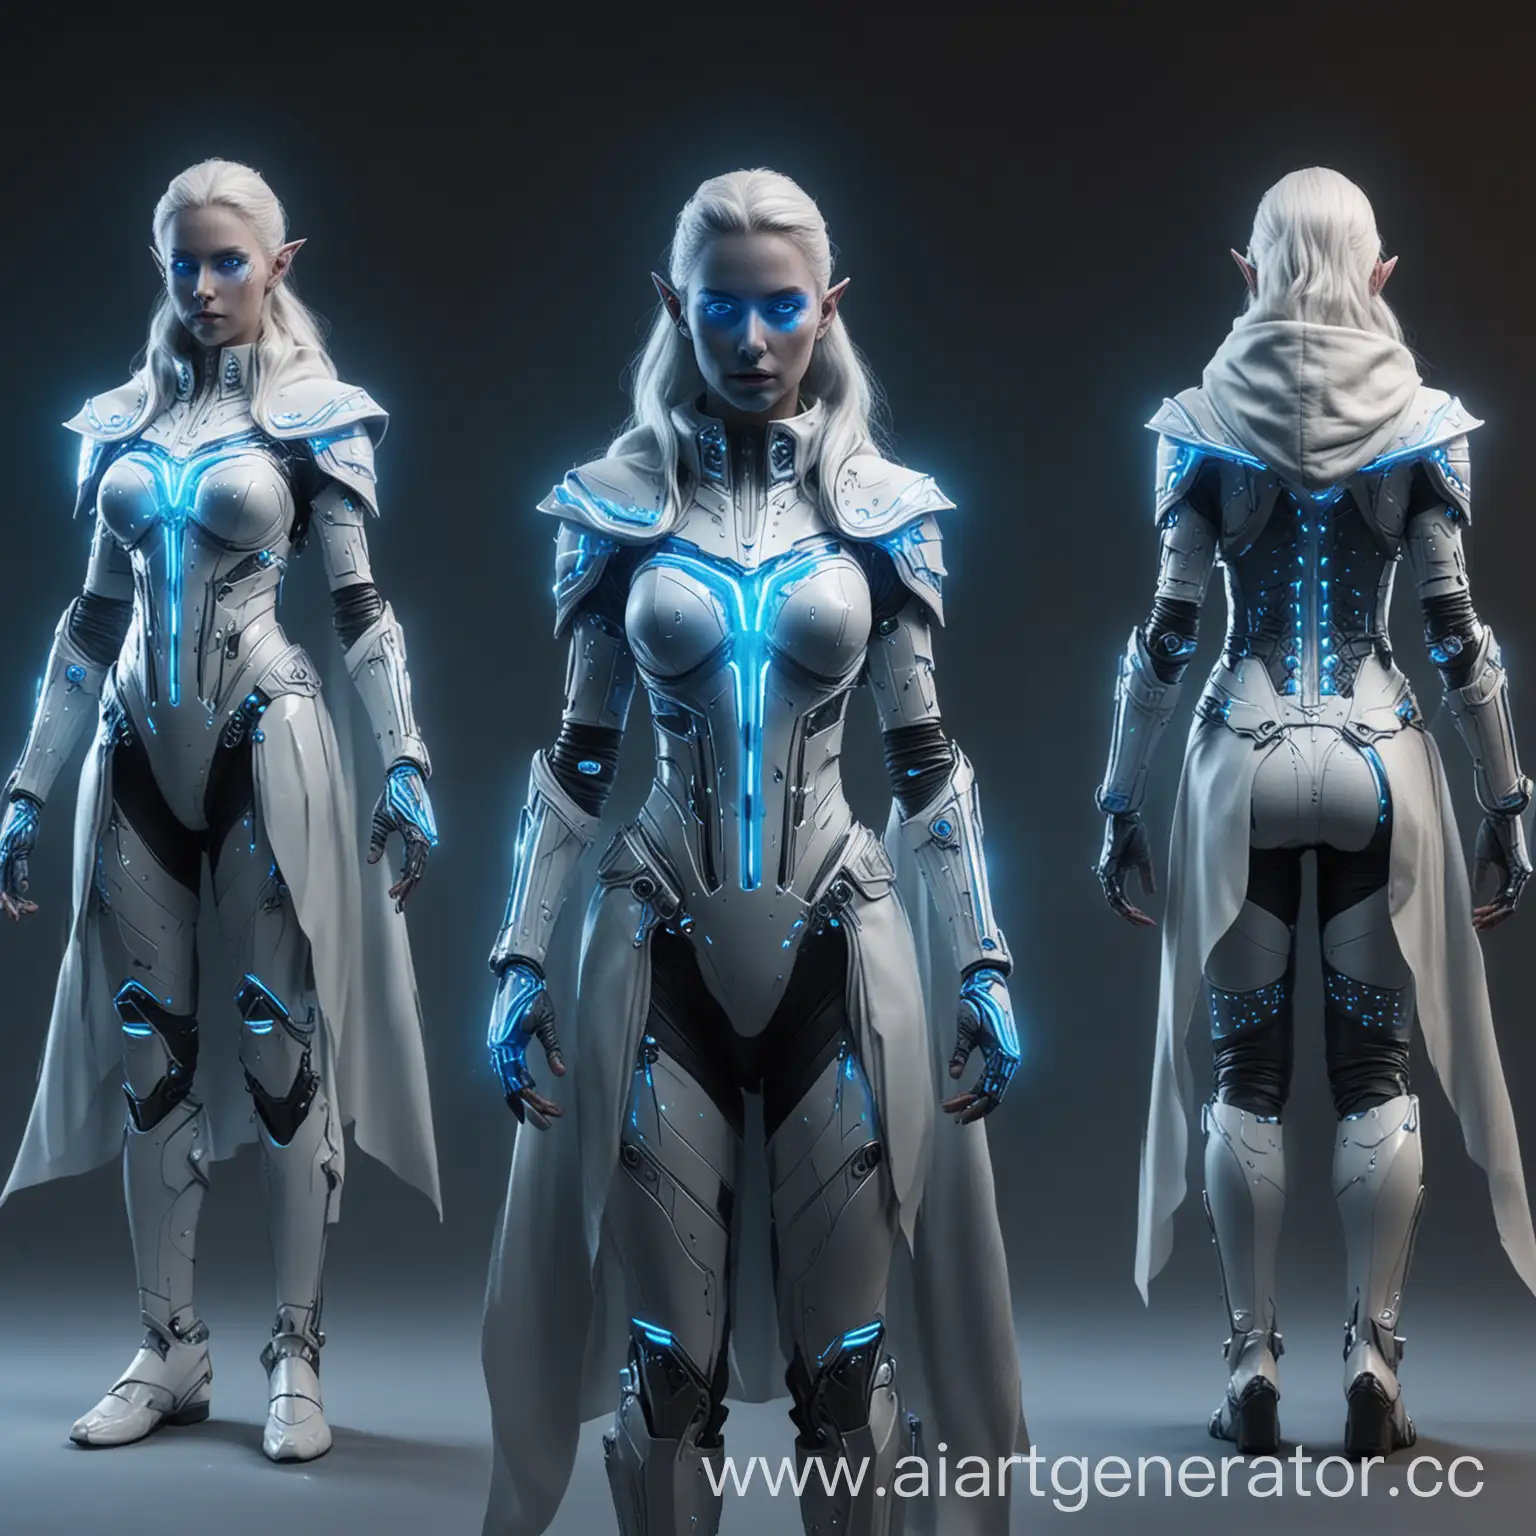 Futuristic-Soldier-Elf-in-Glowing-Electric-Blue-Armor